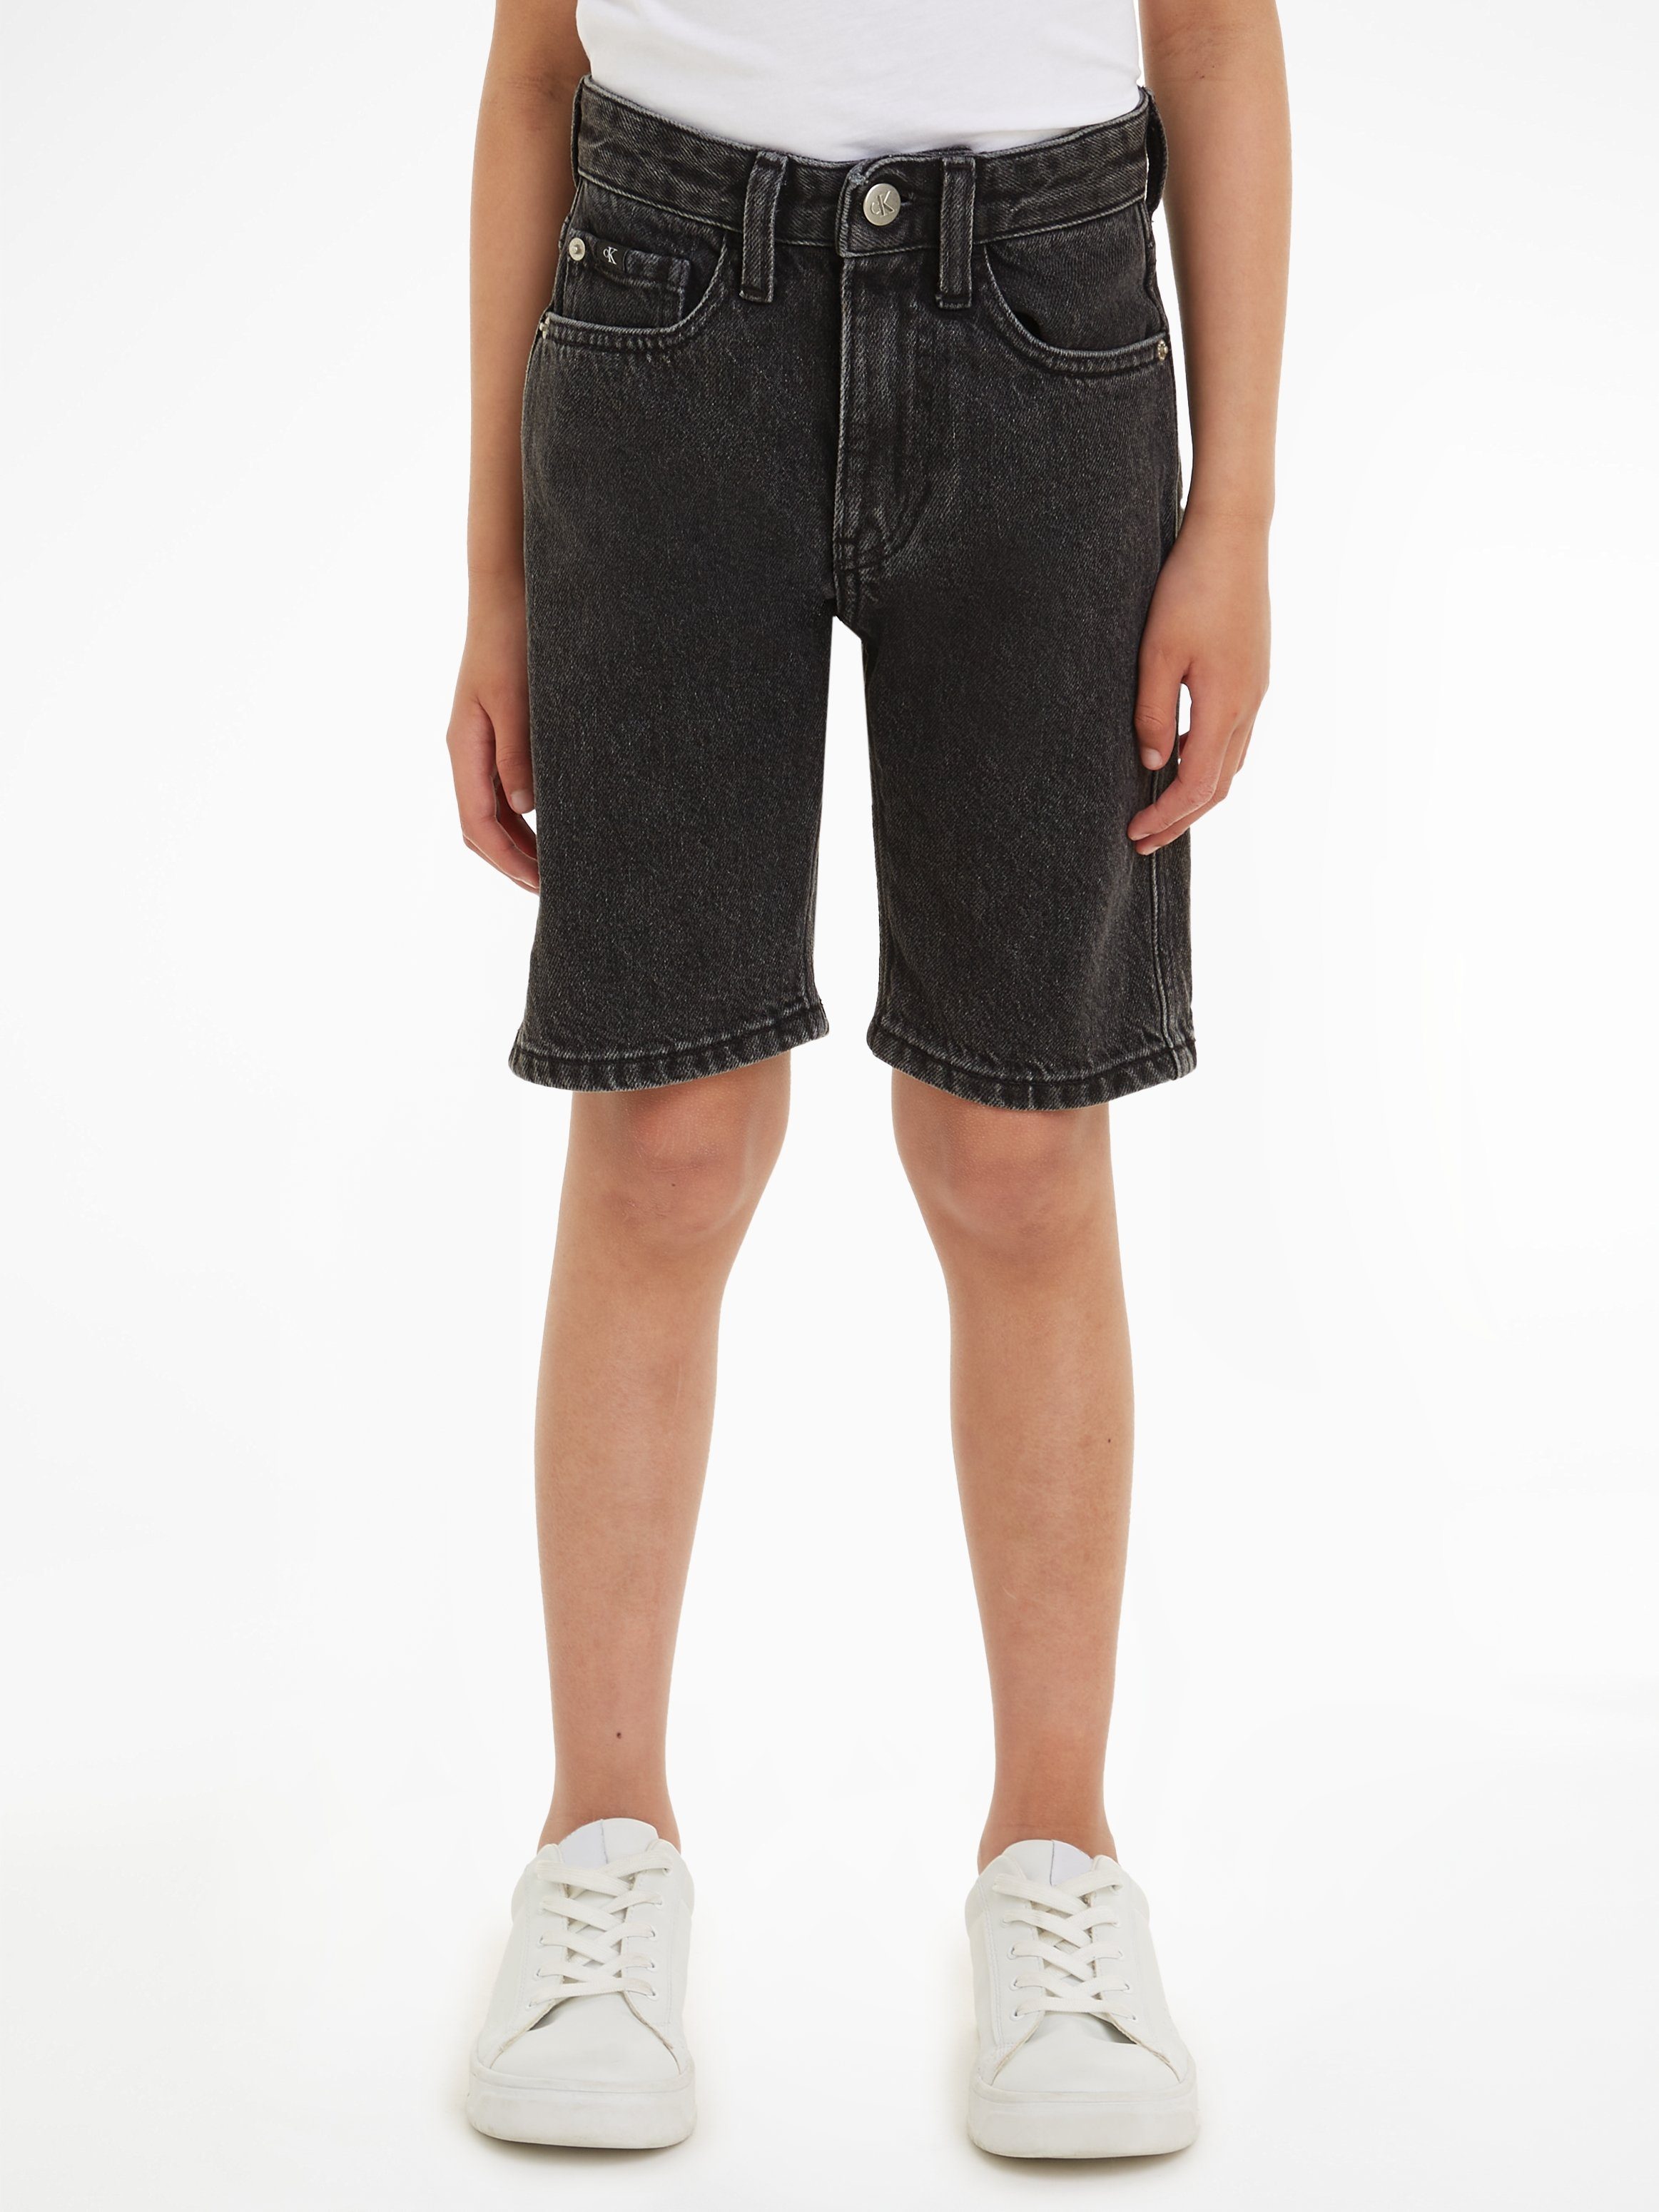 Shorts im RELAXED Klein Calvin SHORTS DENIM 5-Poket-Style Jeans